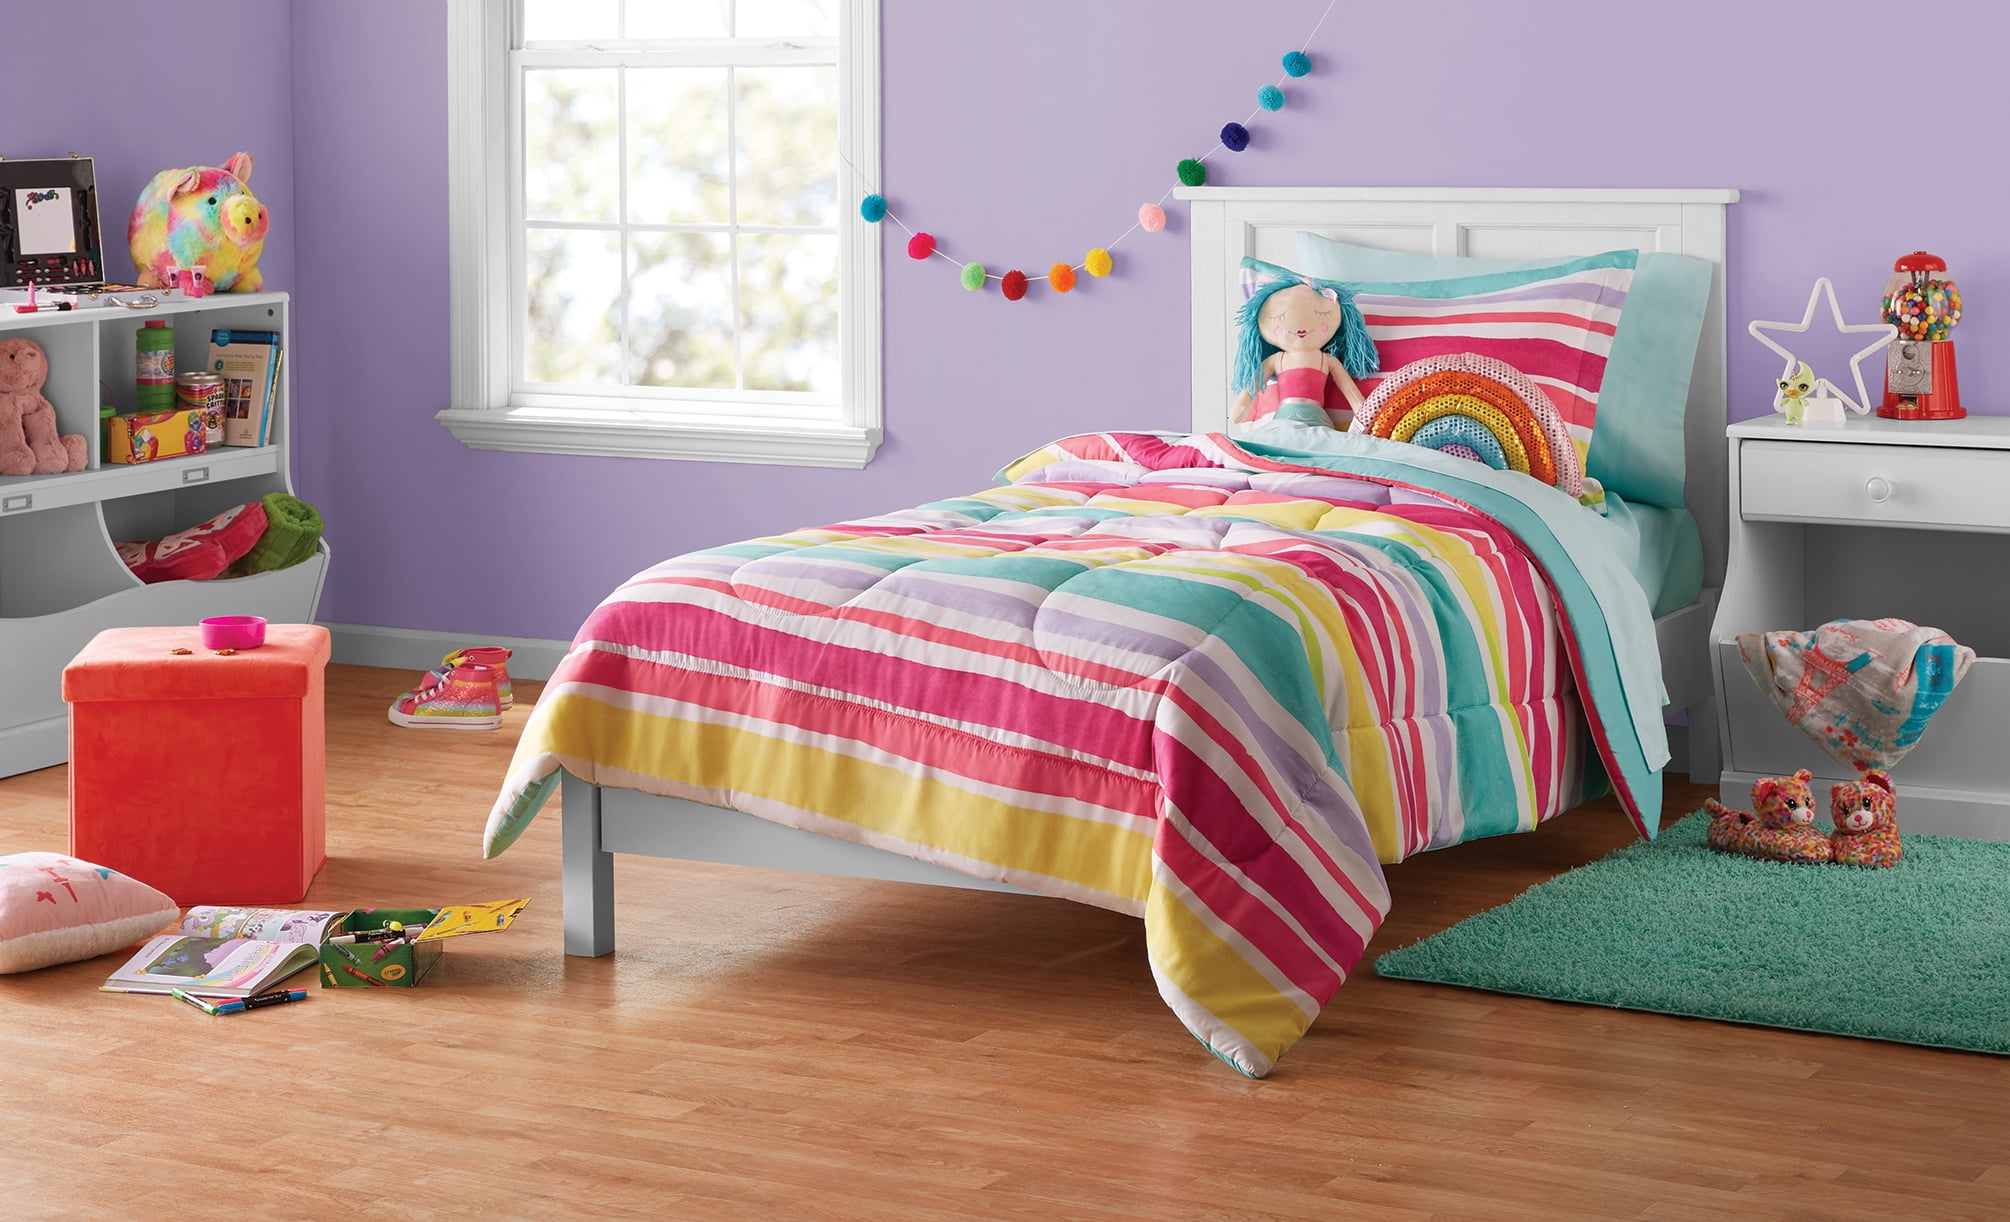 Twin&Full Kids Bedding Set Sheets Girls Comforter Rainbow Unicorn 5 Piece Pink 